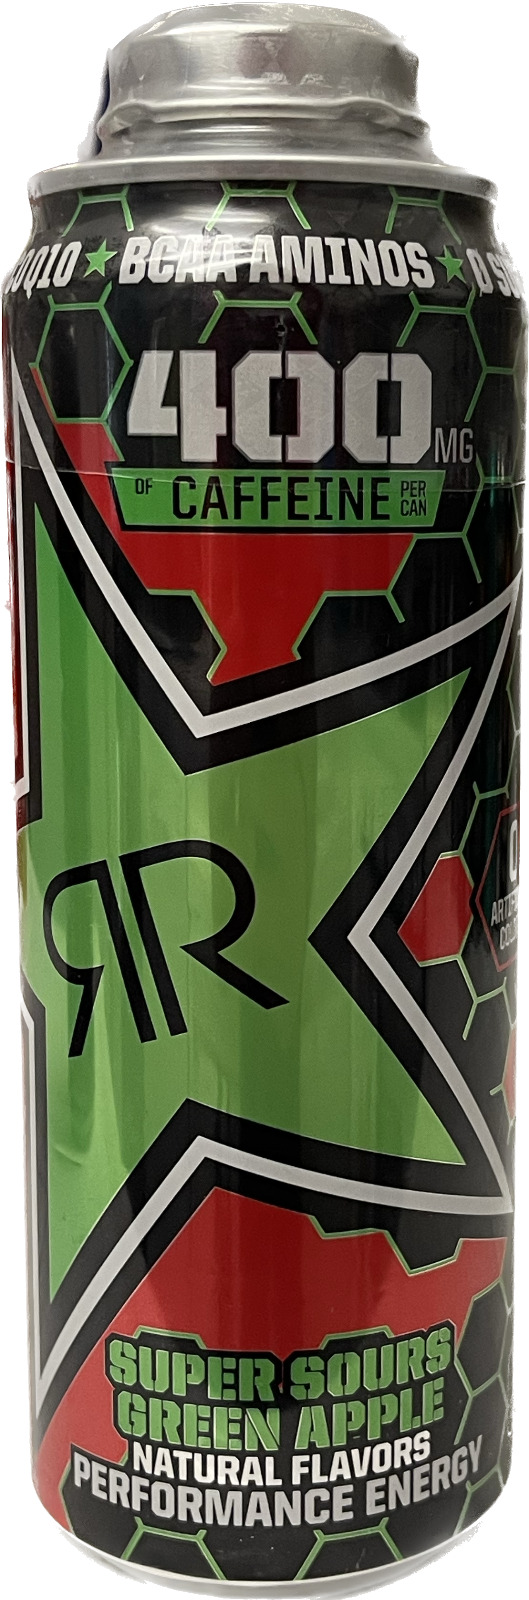 NEW RARE ROCKSTAR ENERGY DRINK XDURANCE SUPER SOURS GREEN APPLE 24 FLOZ CAN HTF